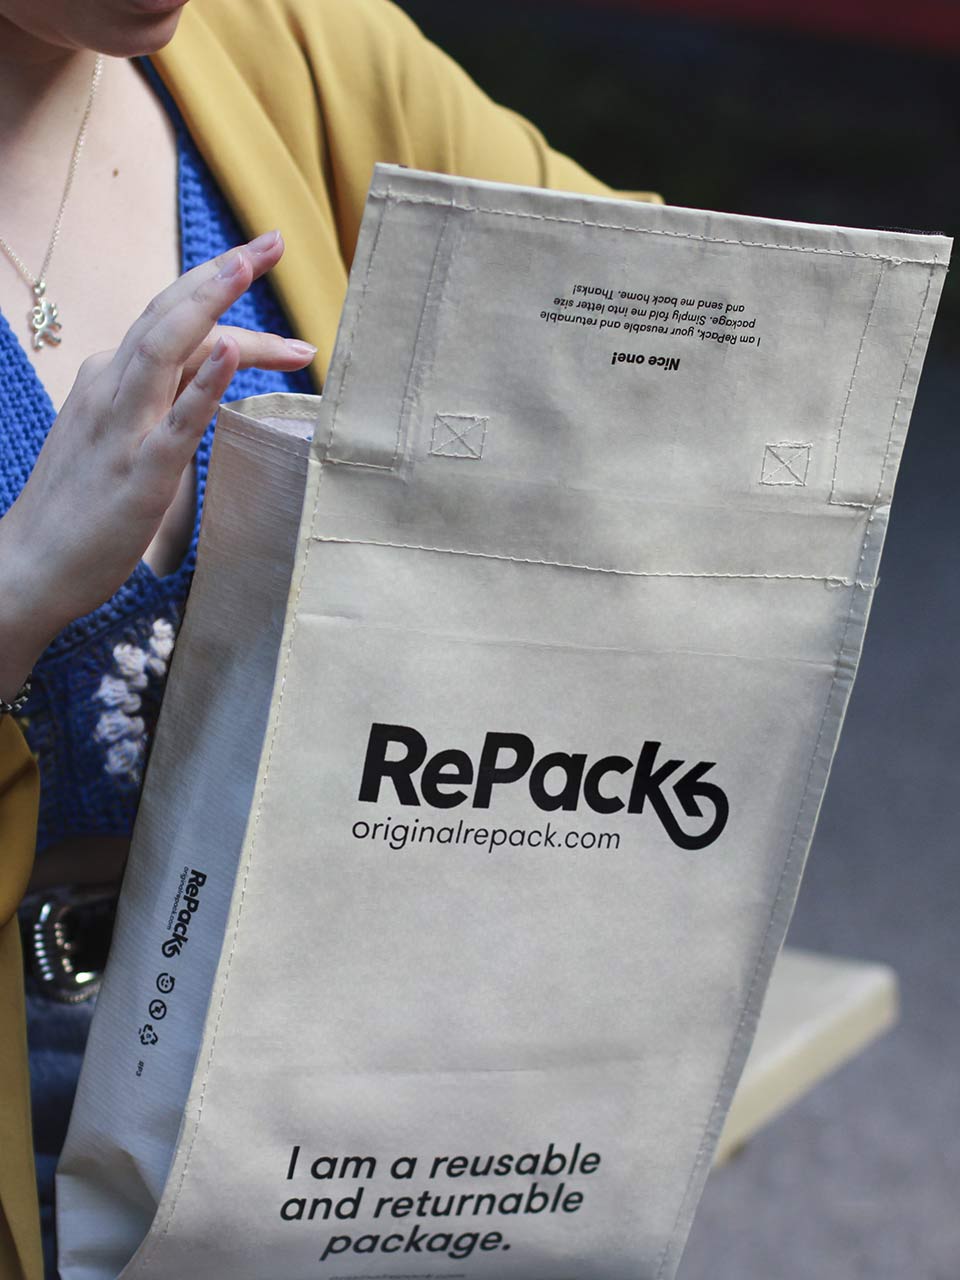 RePack emballage reutilisable